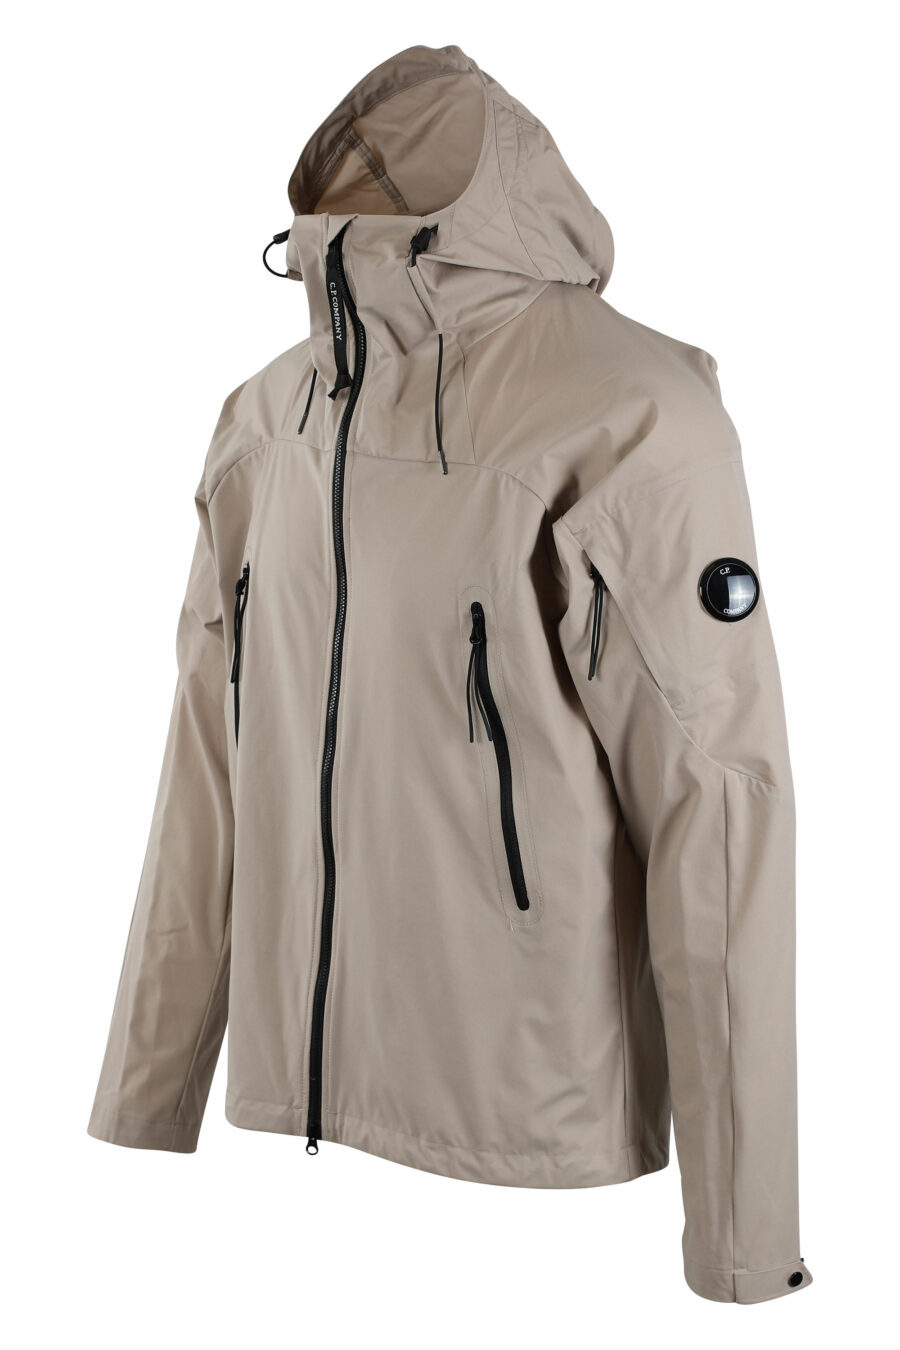 Beige "pro-tek" jacket with hood and circular mini-logo on the side - IMG 2668